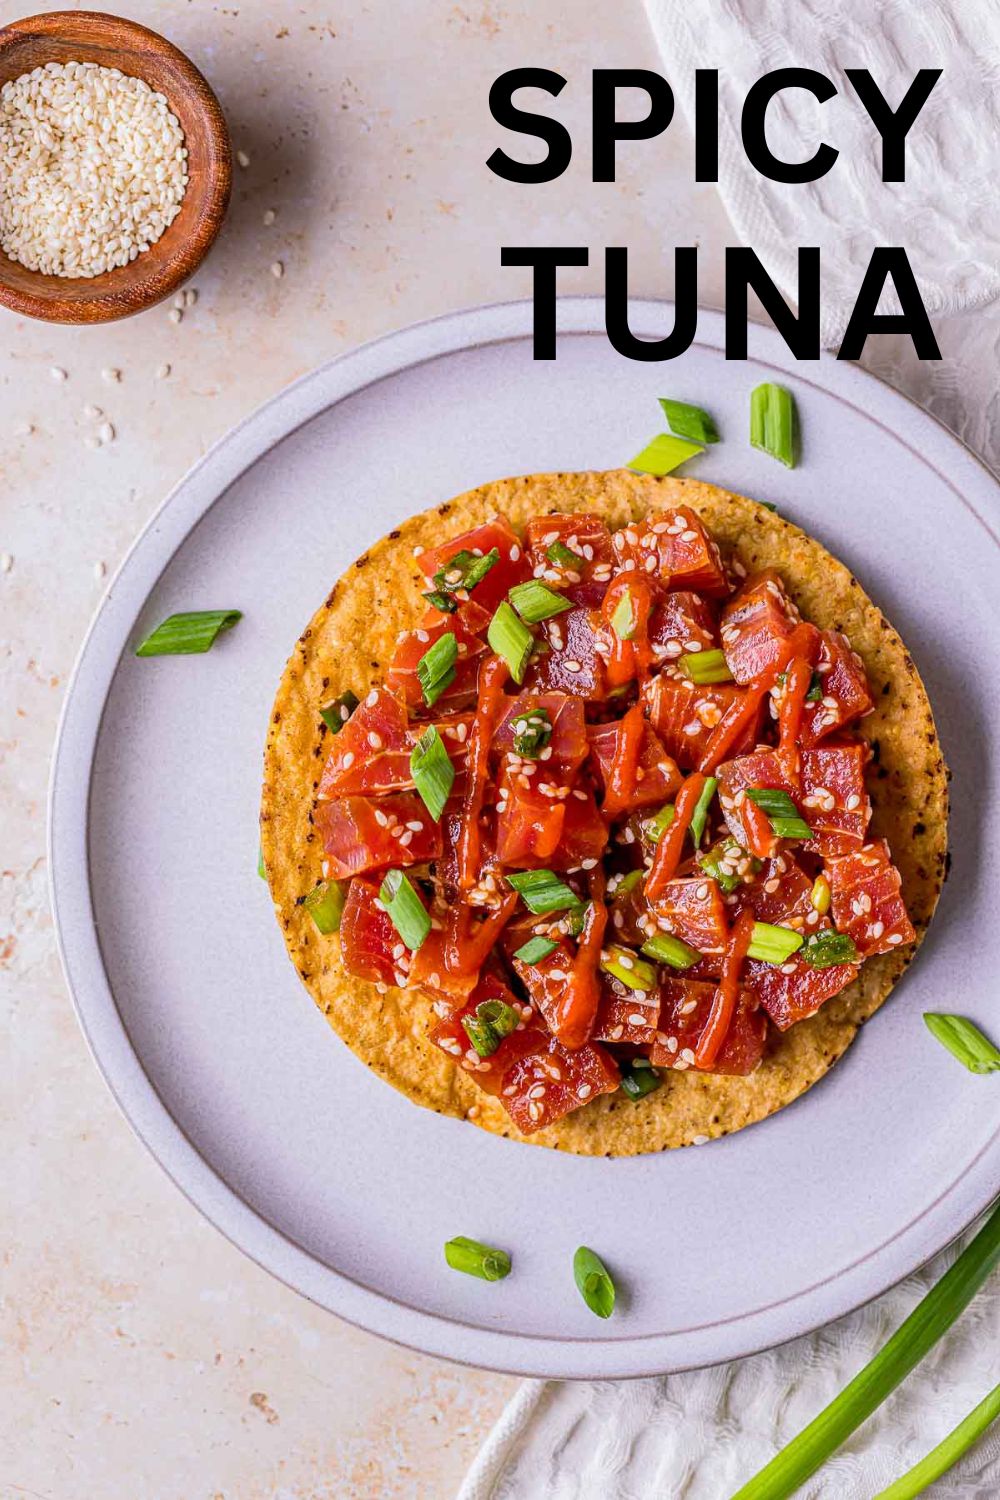 Spicy Tuna